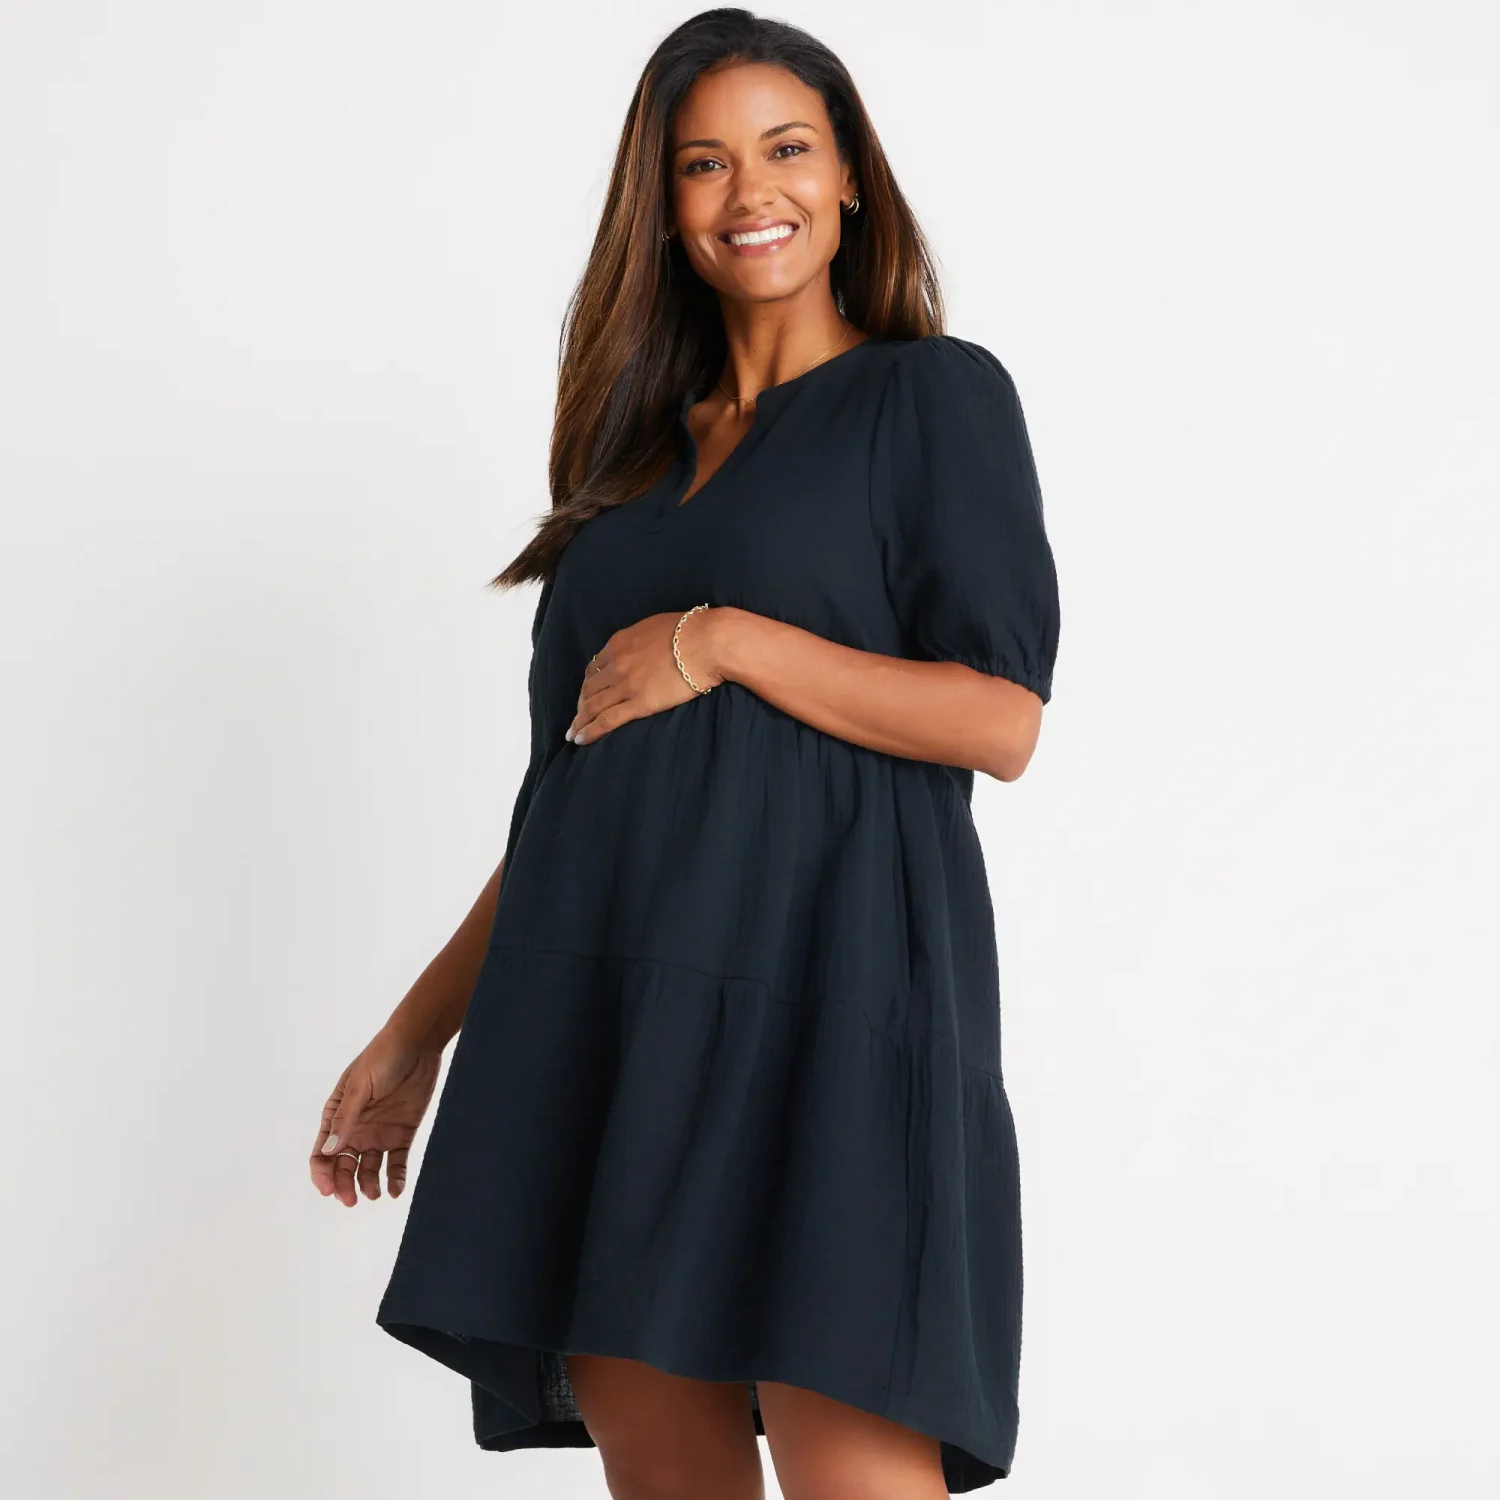 Marine Layer brand contemporary and stylish maternity friendly black mini dresses